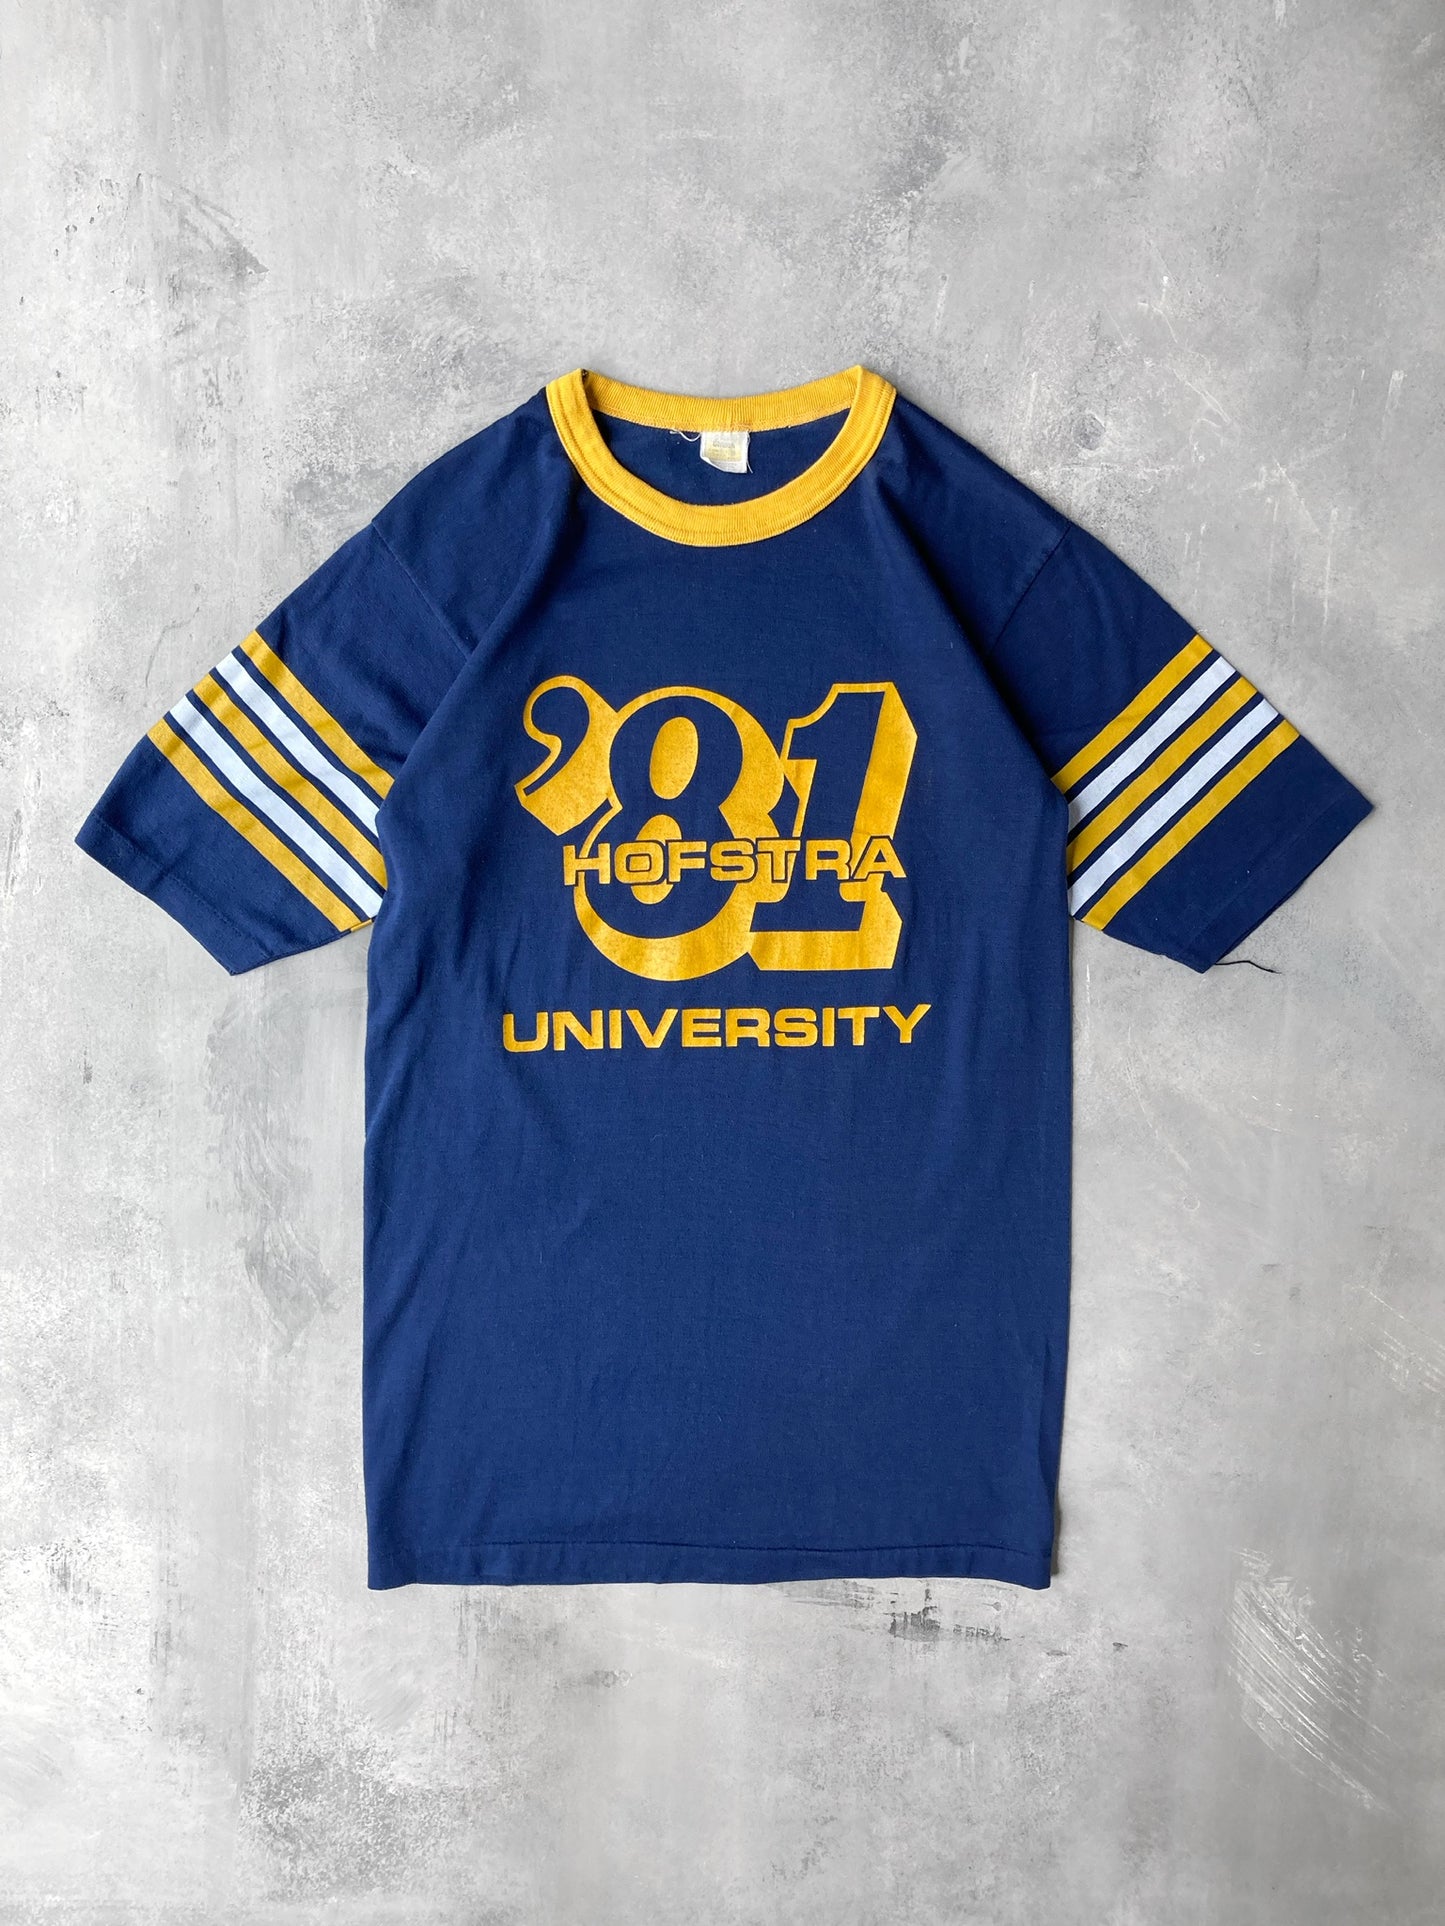 Hofstra University '81 T-Shirt - XS / Small